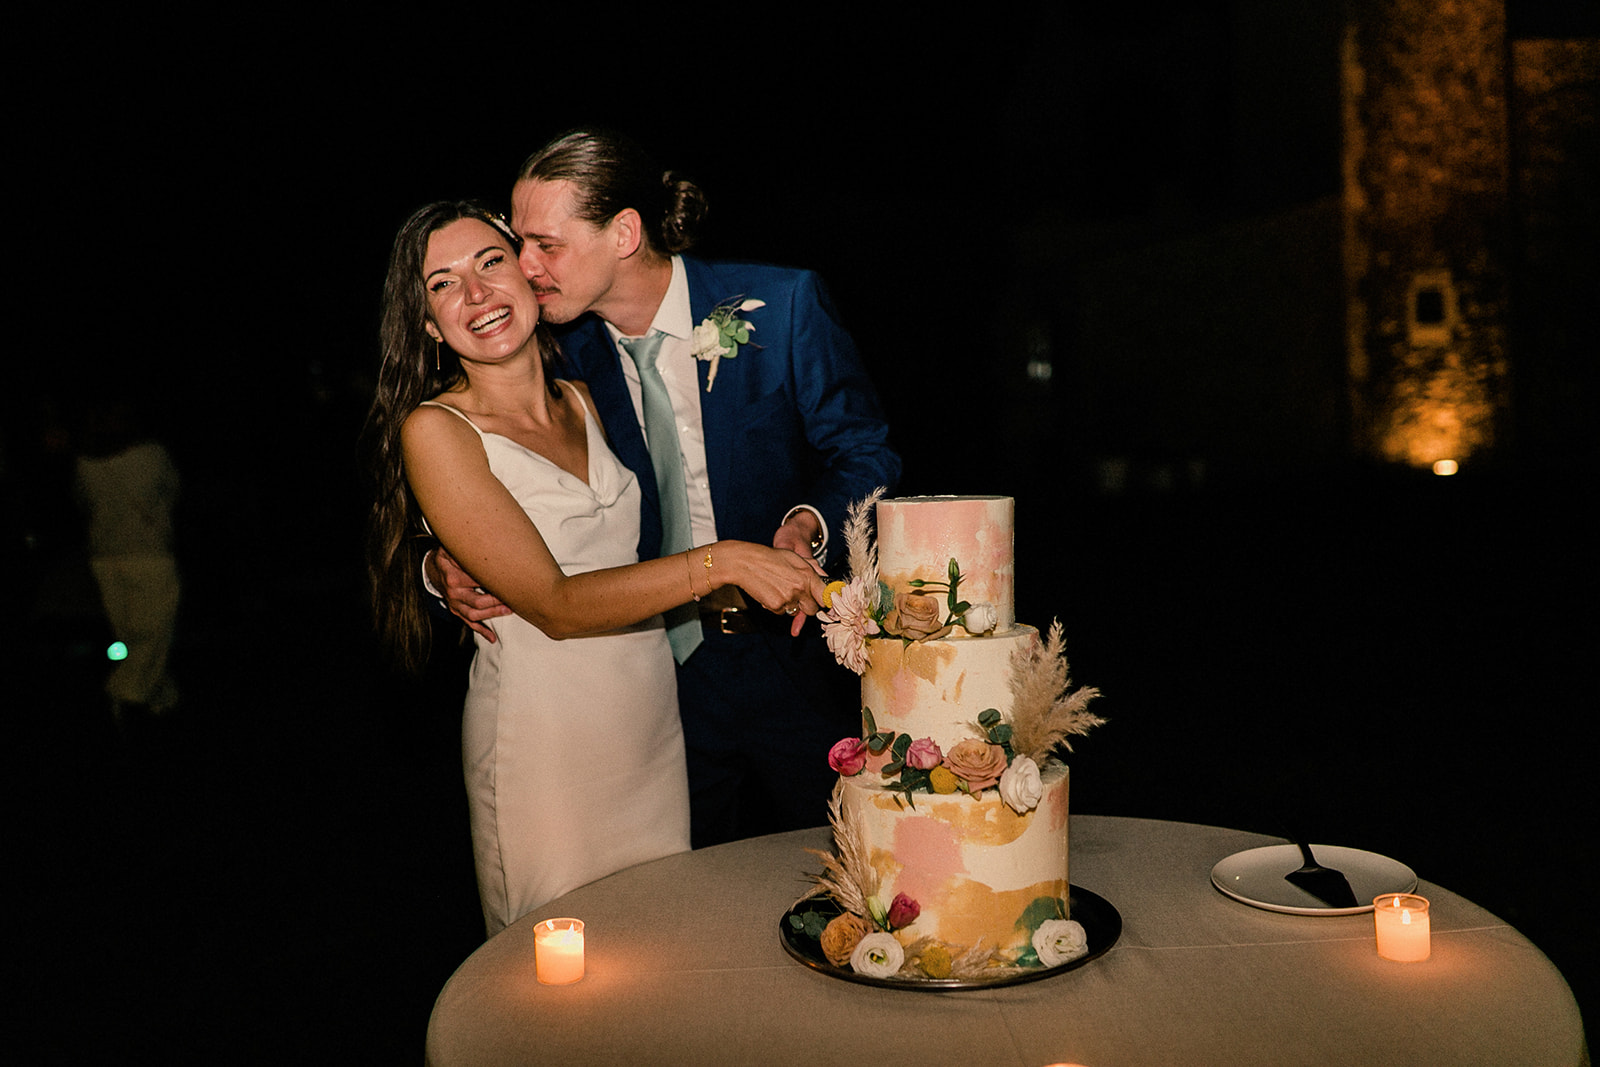 A bride and groom cutting their wedding cake made by Soraya Sweet Mama bakery based in Barcelona